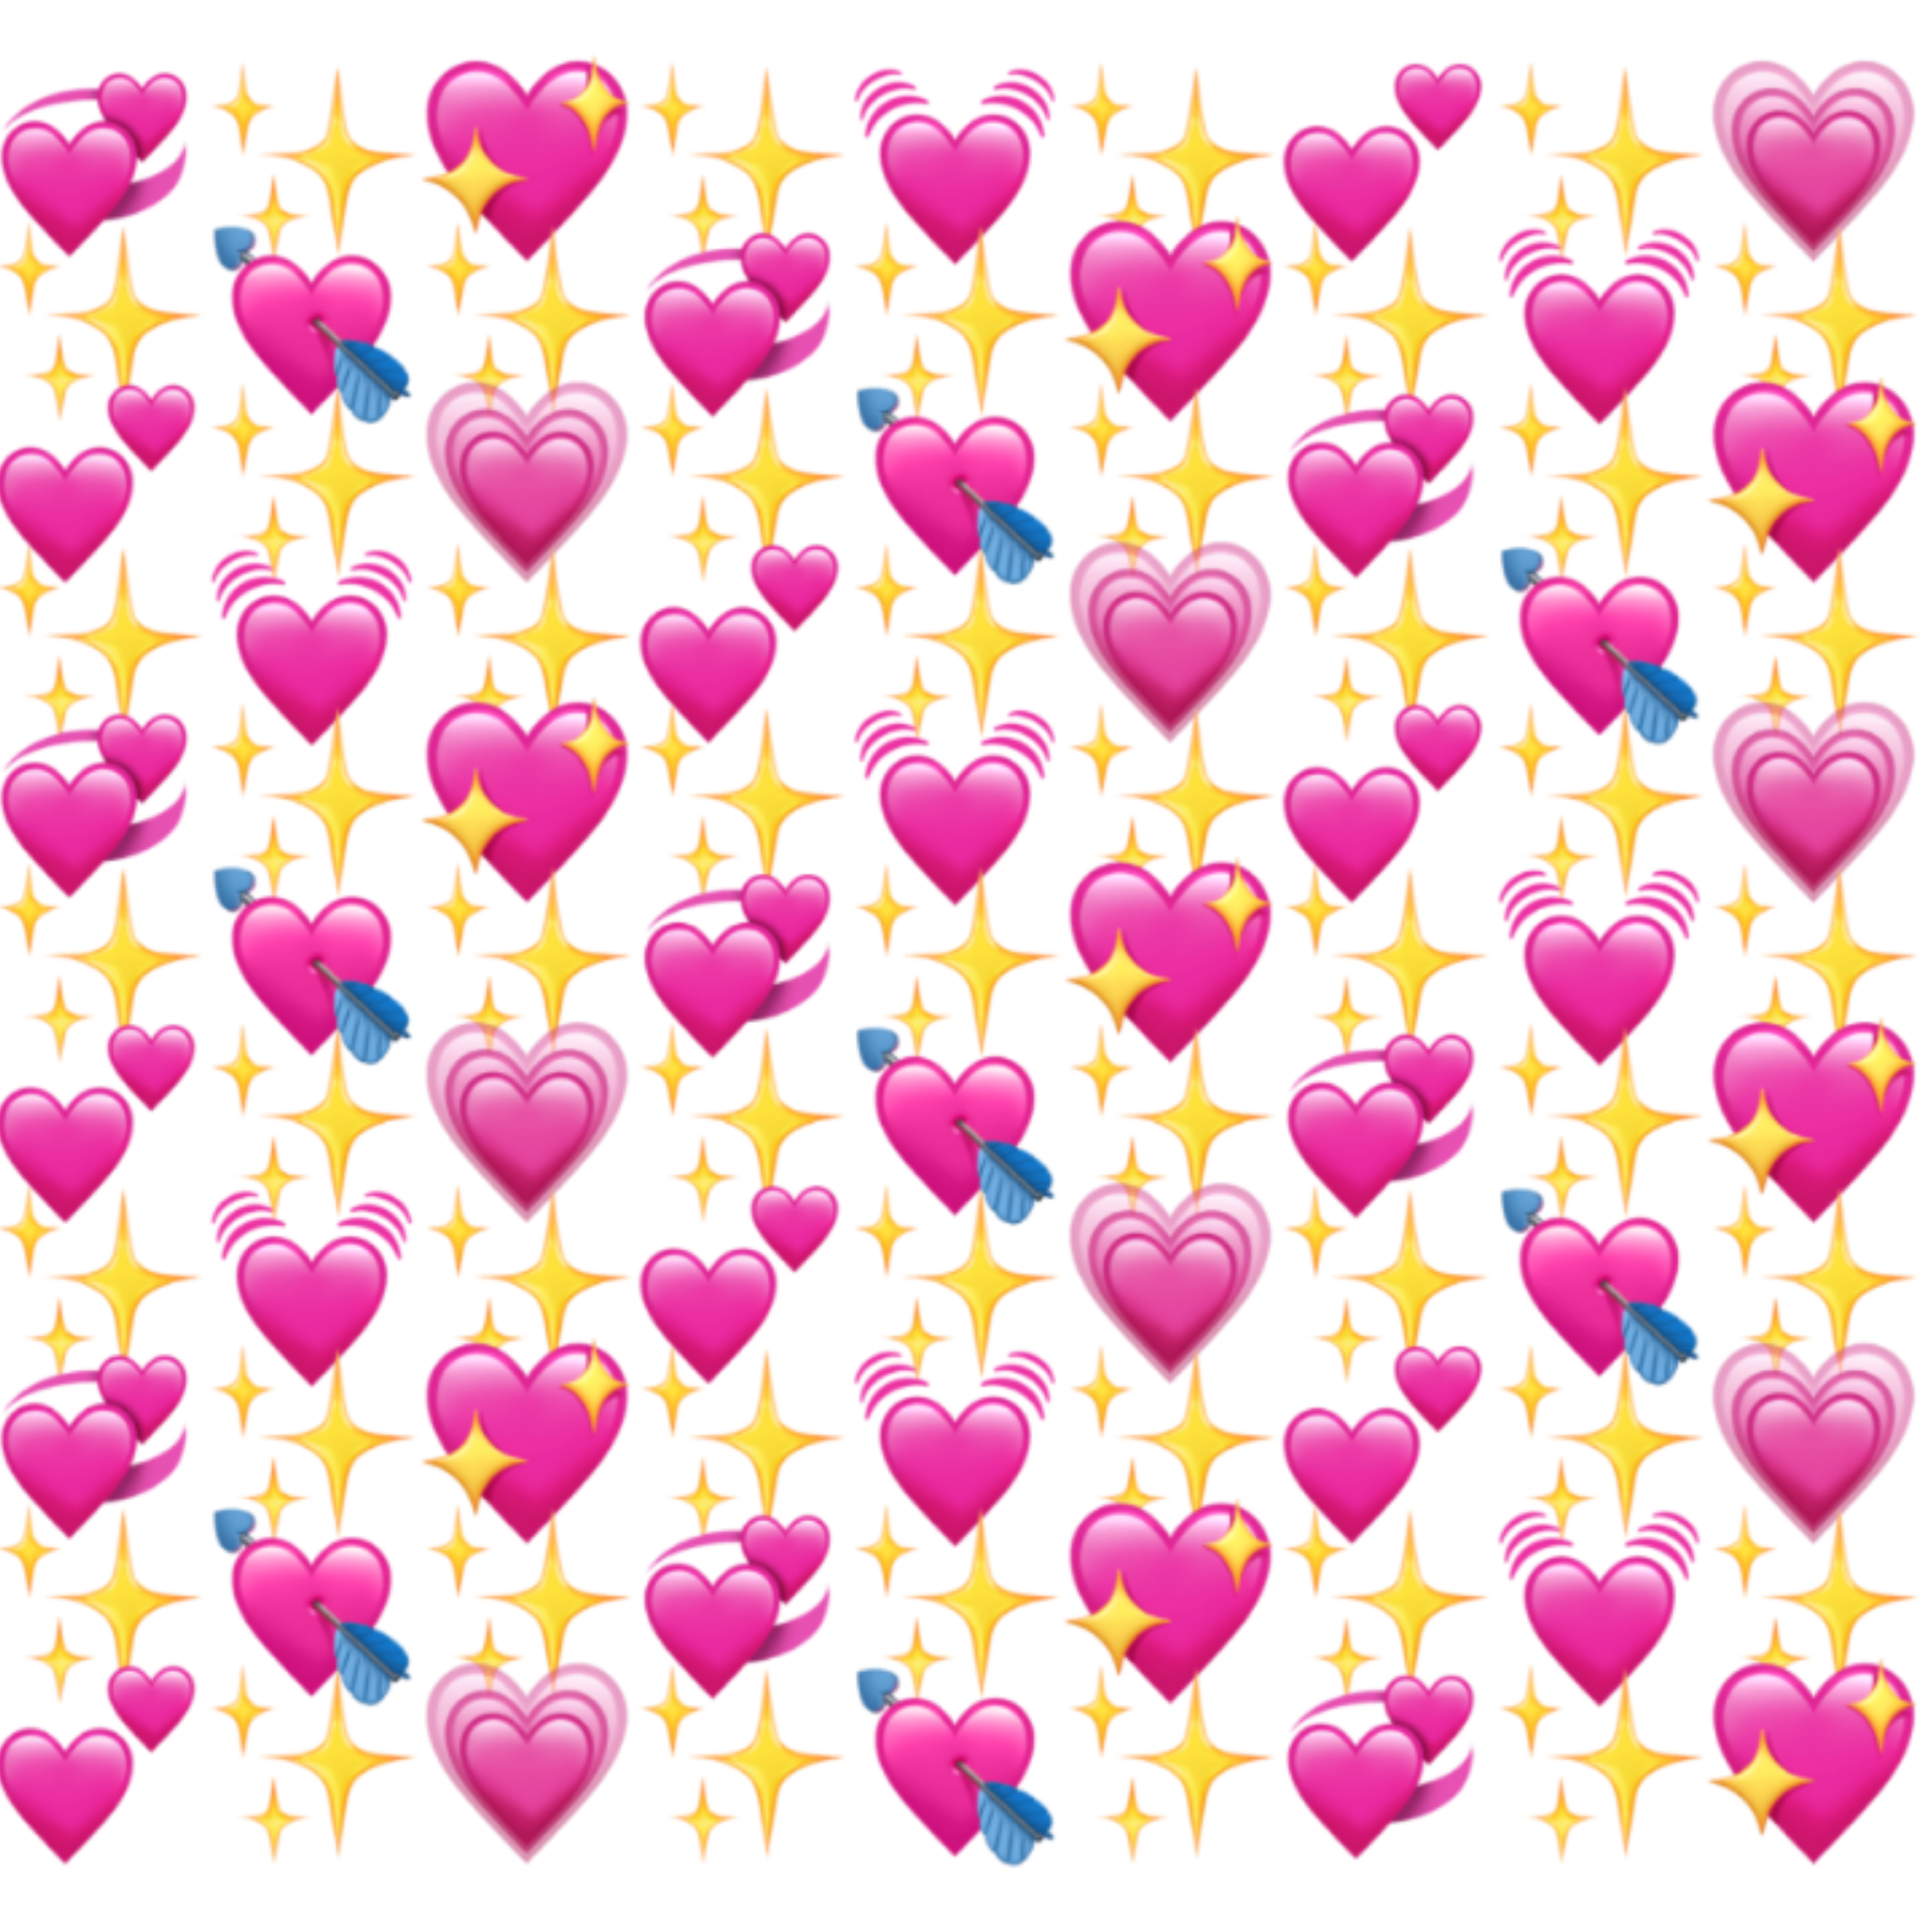 Heart Emoji Pictures  Download Free Images on Unsplash